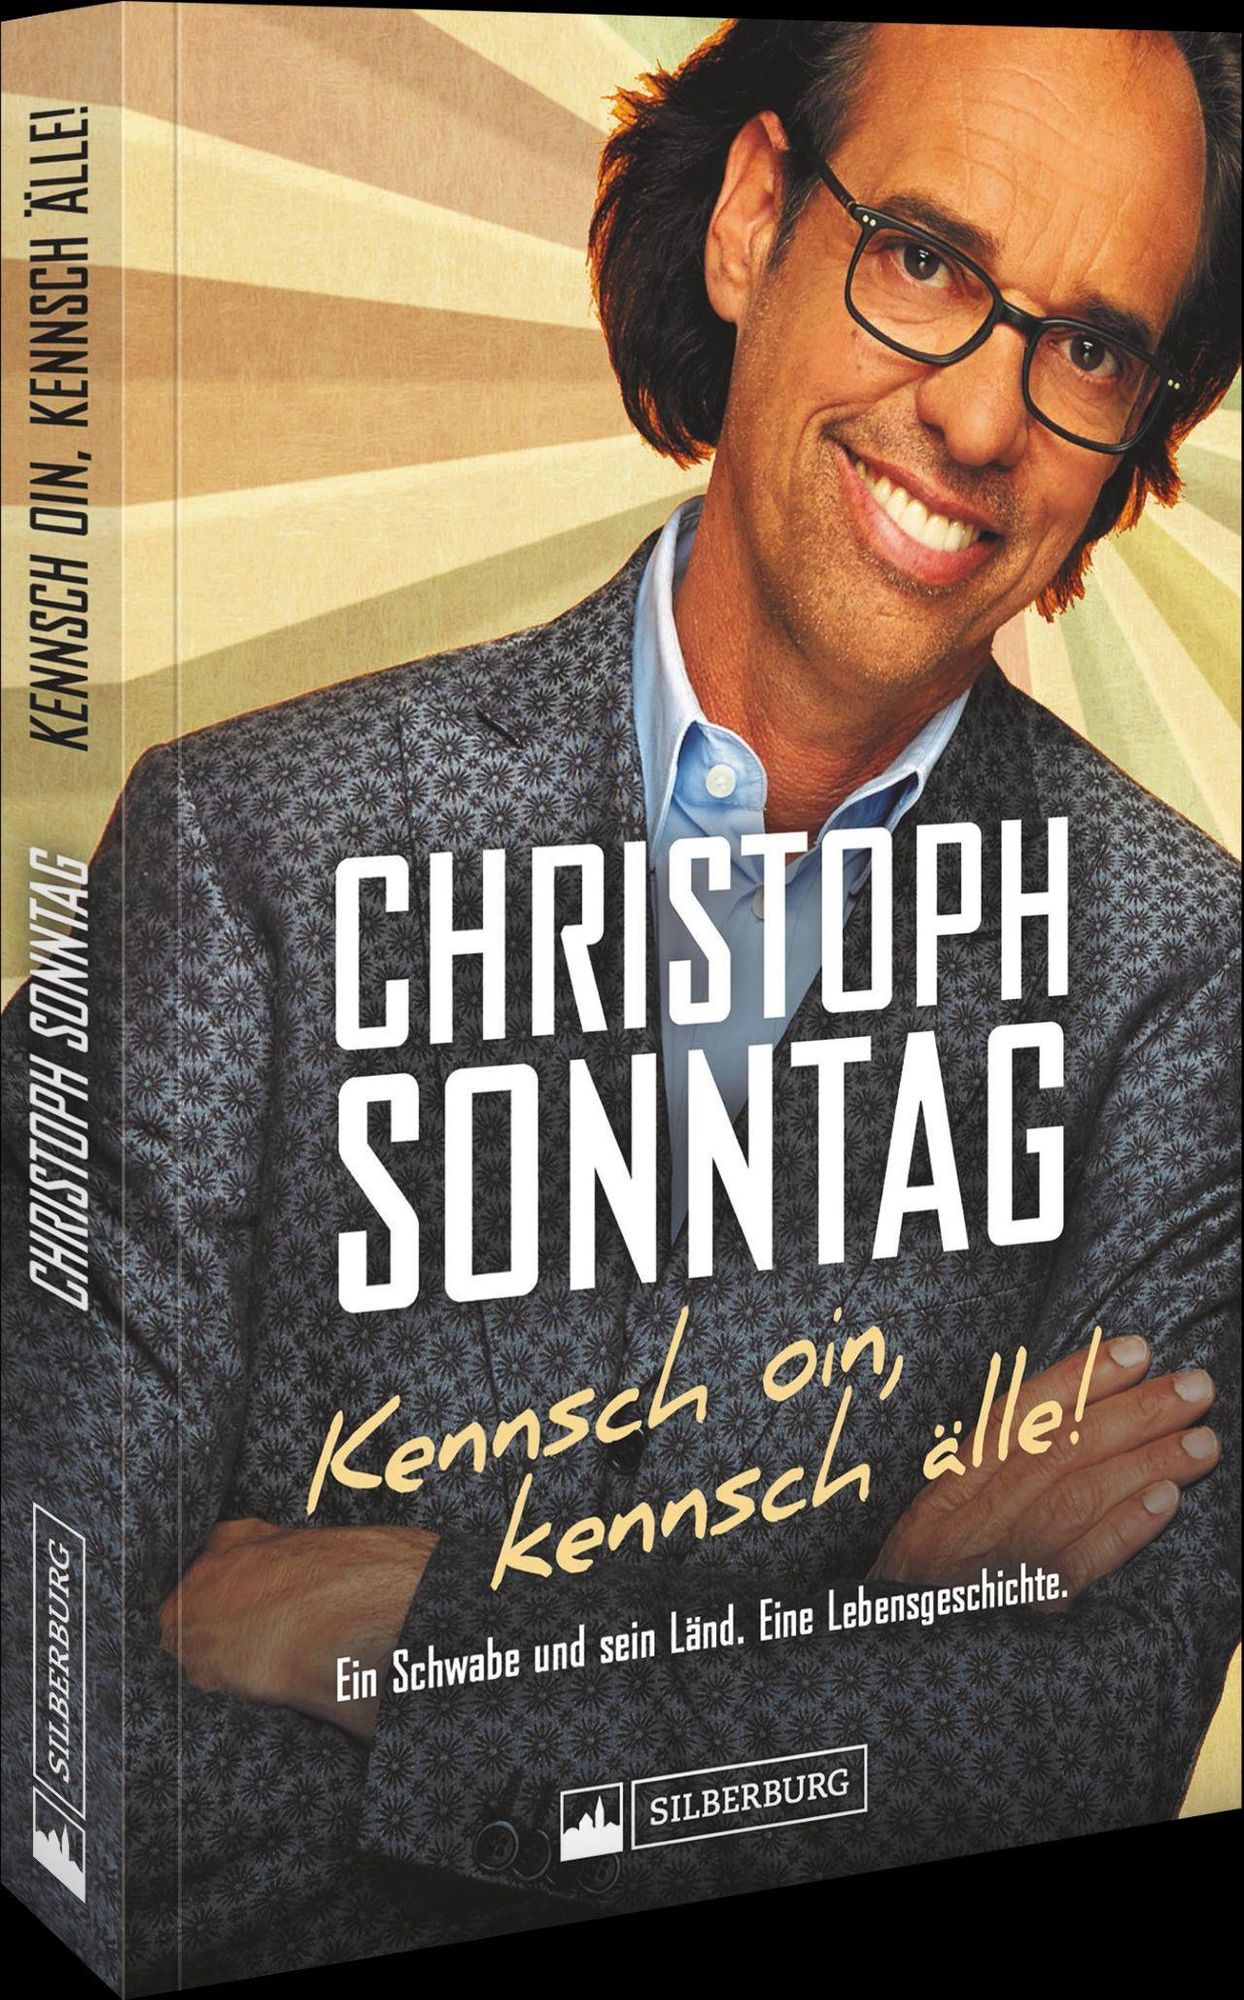 Christoph Sonntag ´Kennsch oin, kennsch älle!´ bestellen